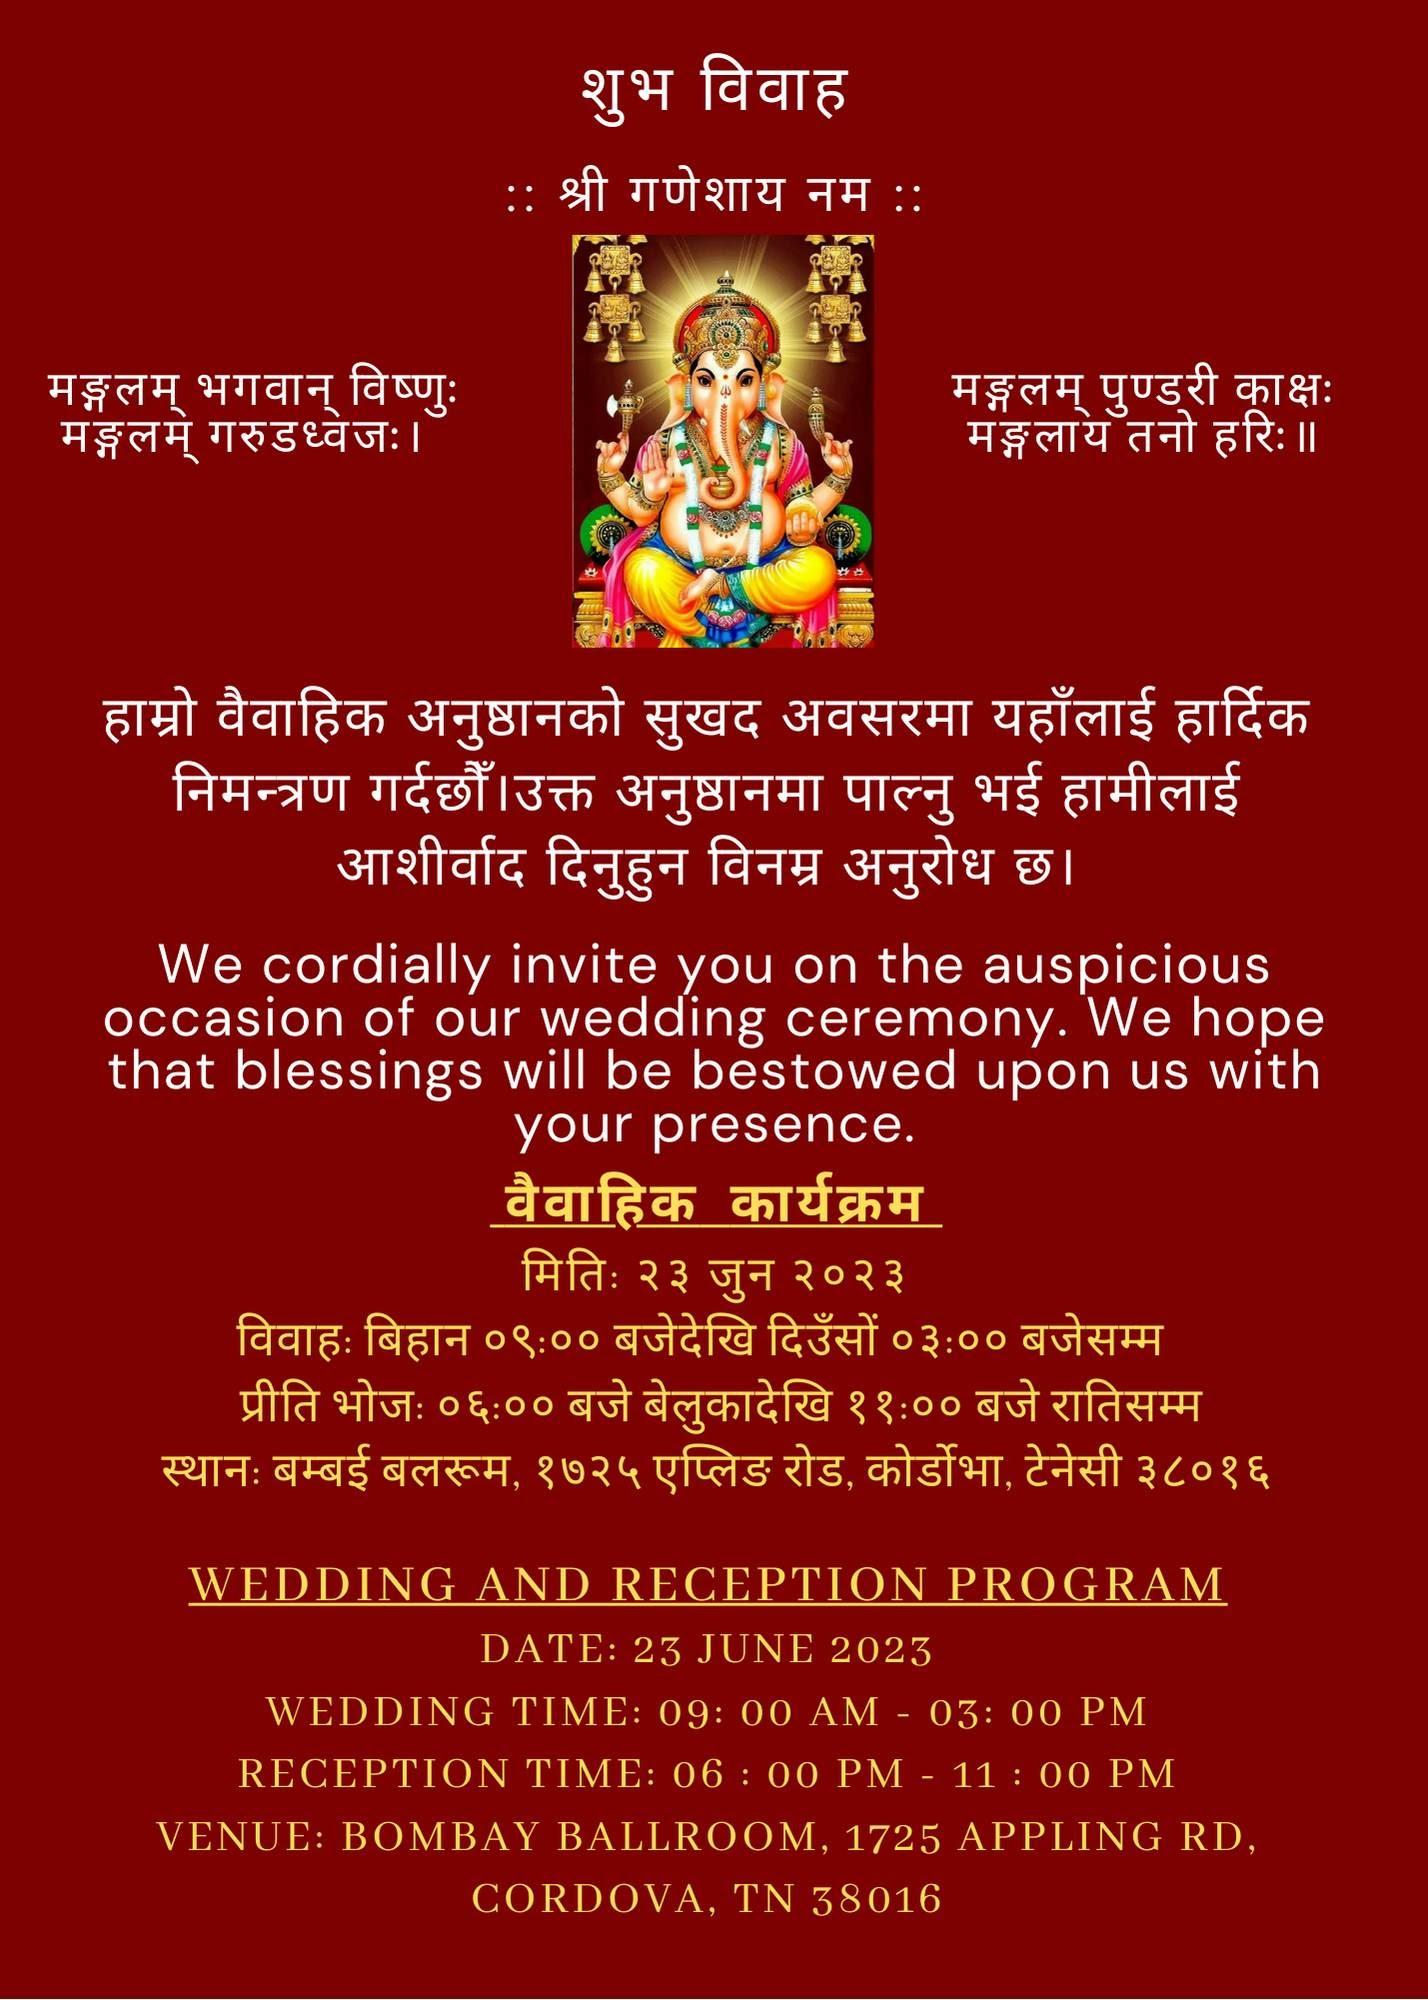 The Wedding Website of Dewashish Koirala and Surakshya Sapkota